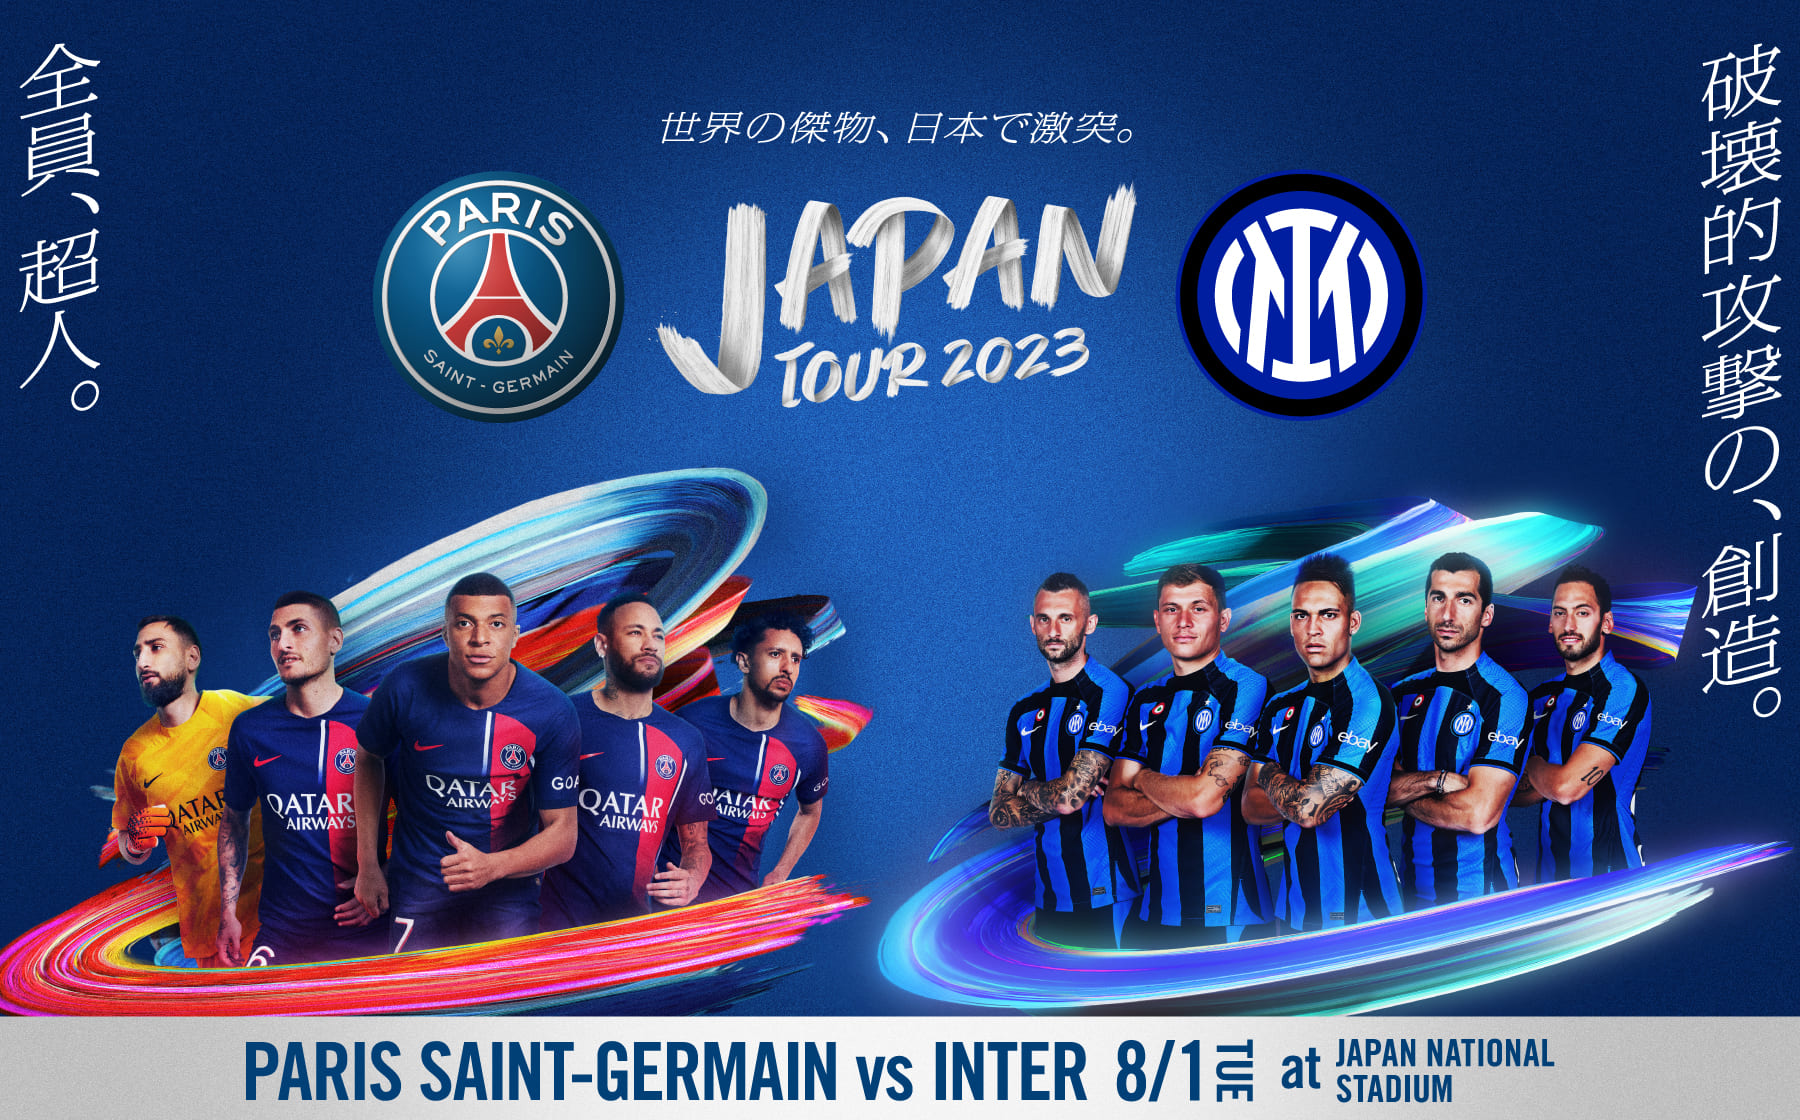 Paris Saint-Germain JAPAN TOUR 2023 | チケットぴあ[チケット購入・予約]